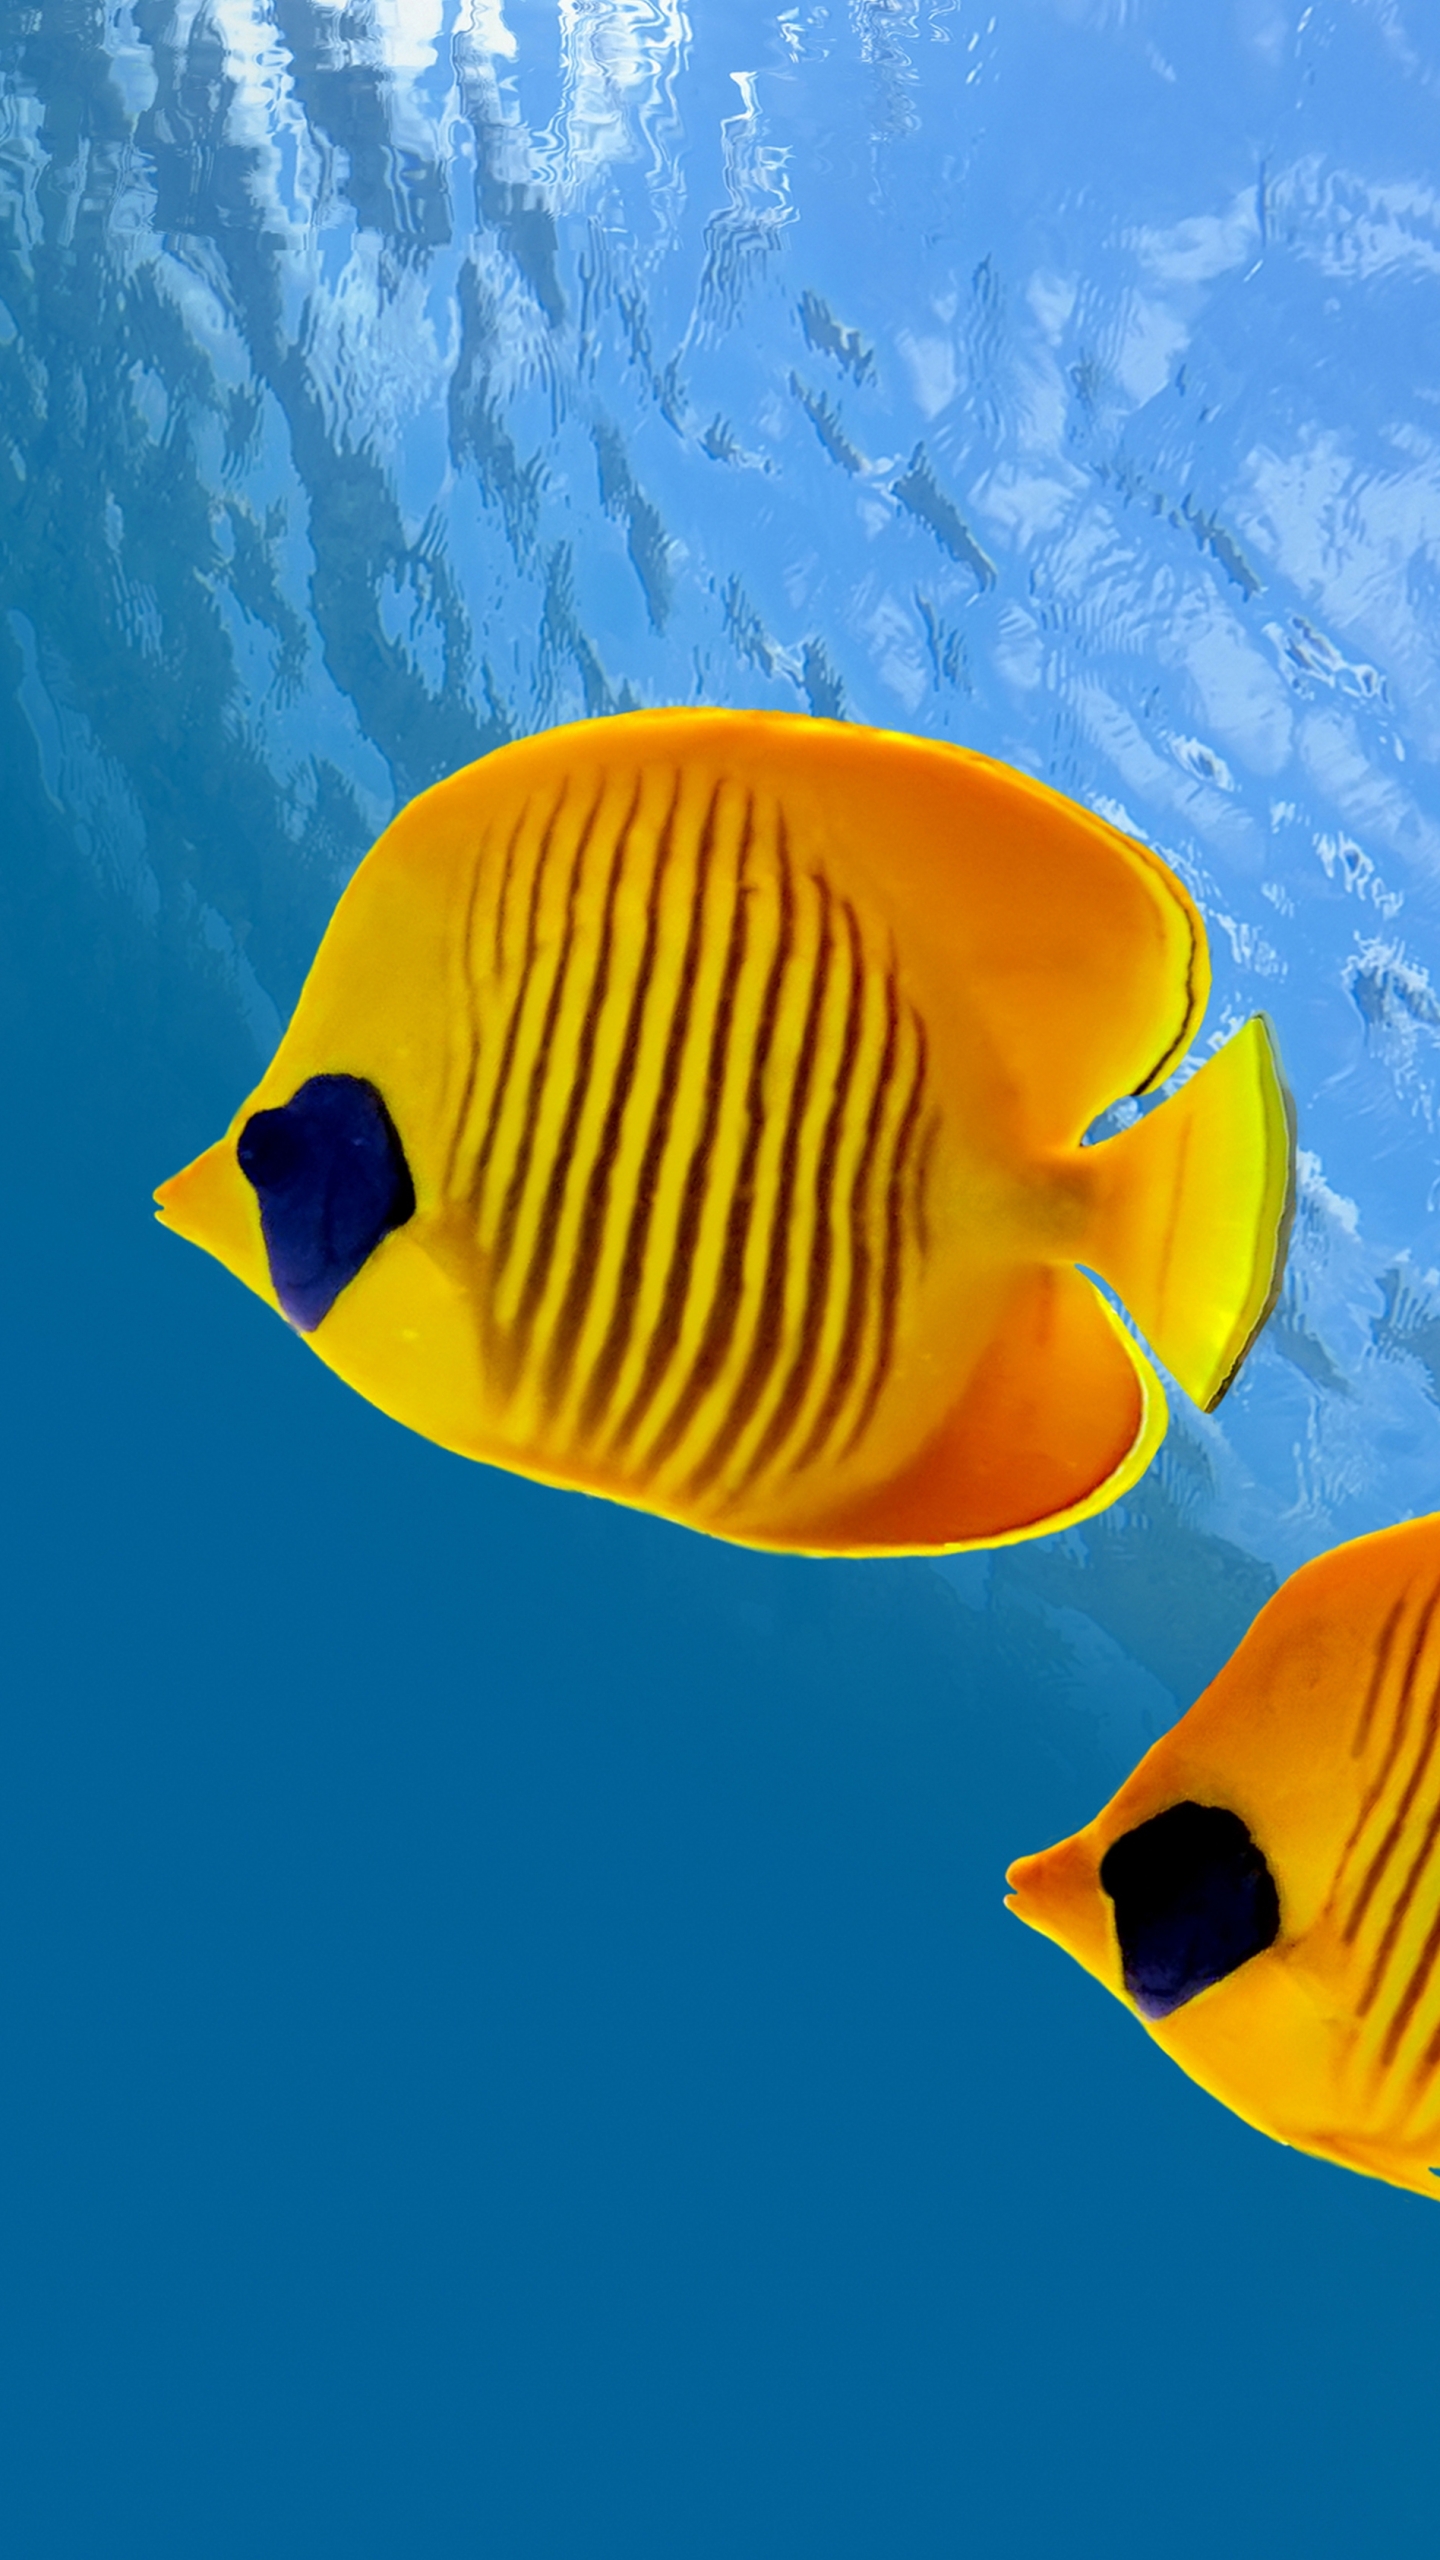 Underwater ocean scene with butterfly fish